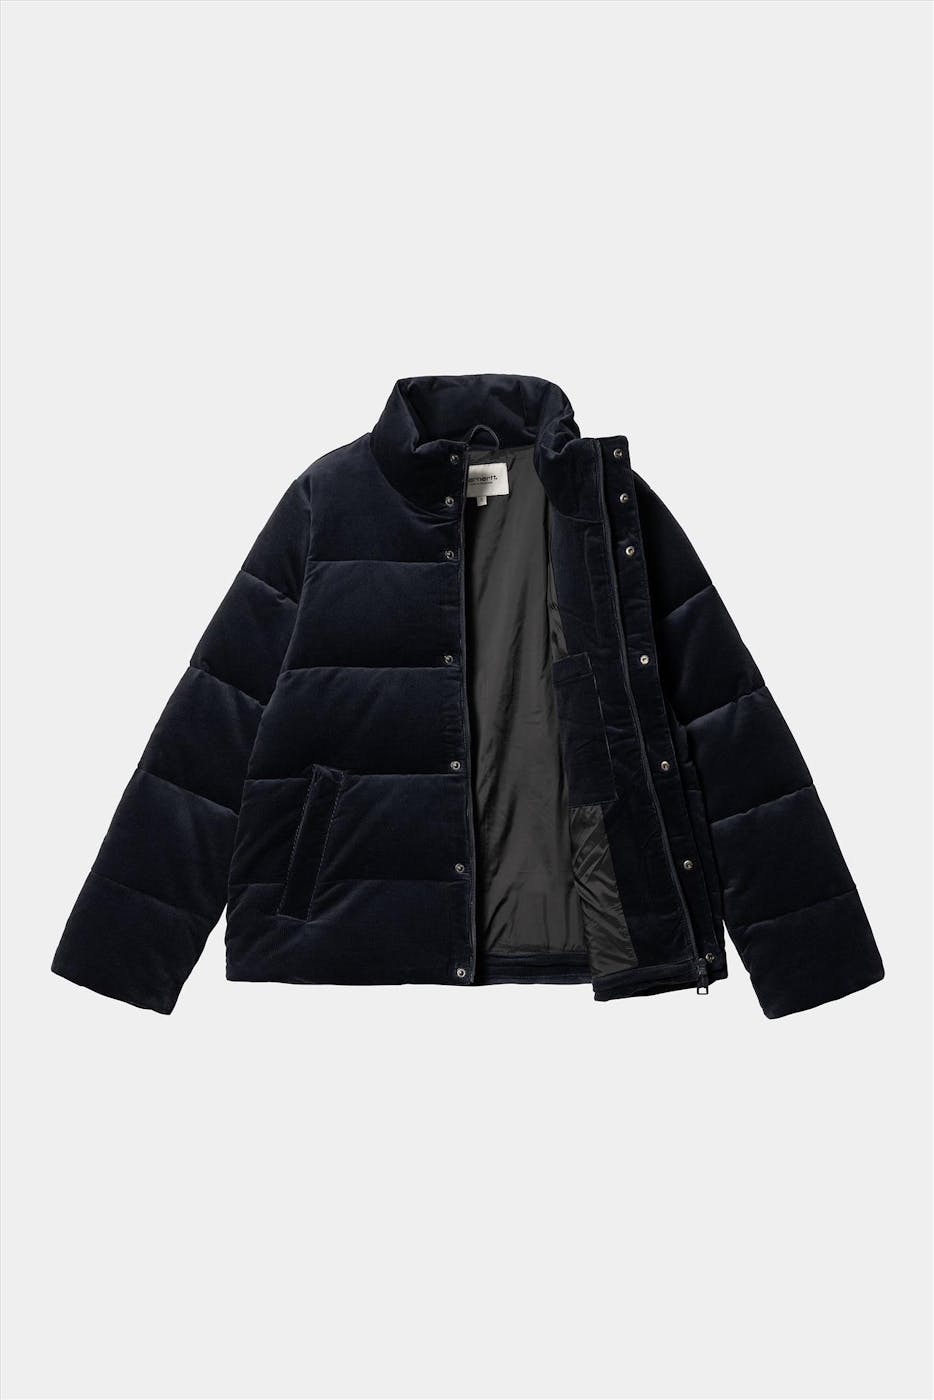 Carhartt WIP - Donkerblauwe Layton jas